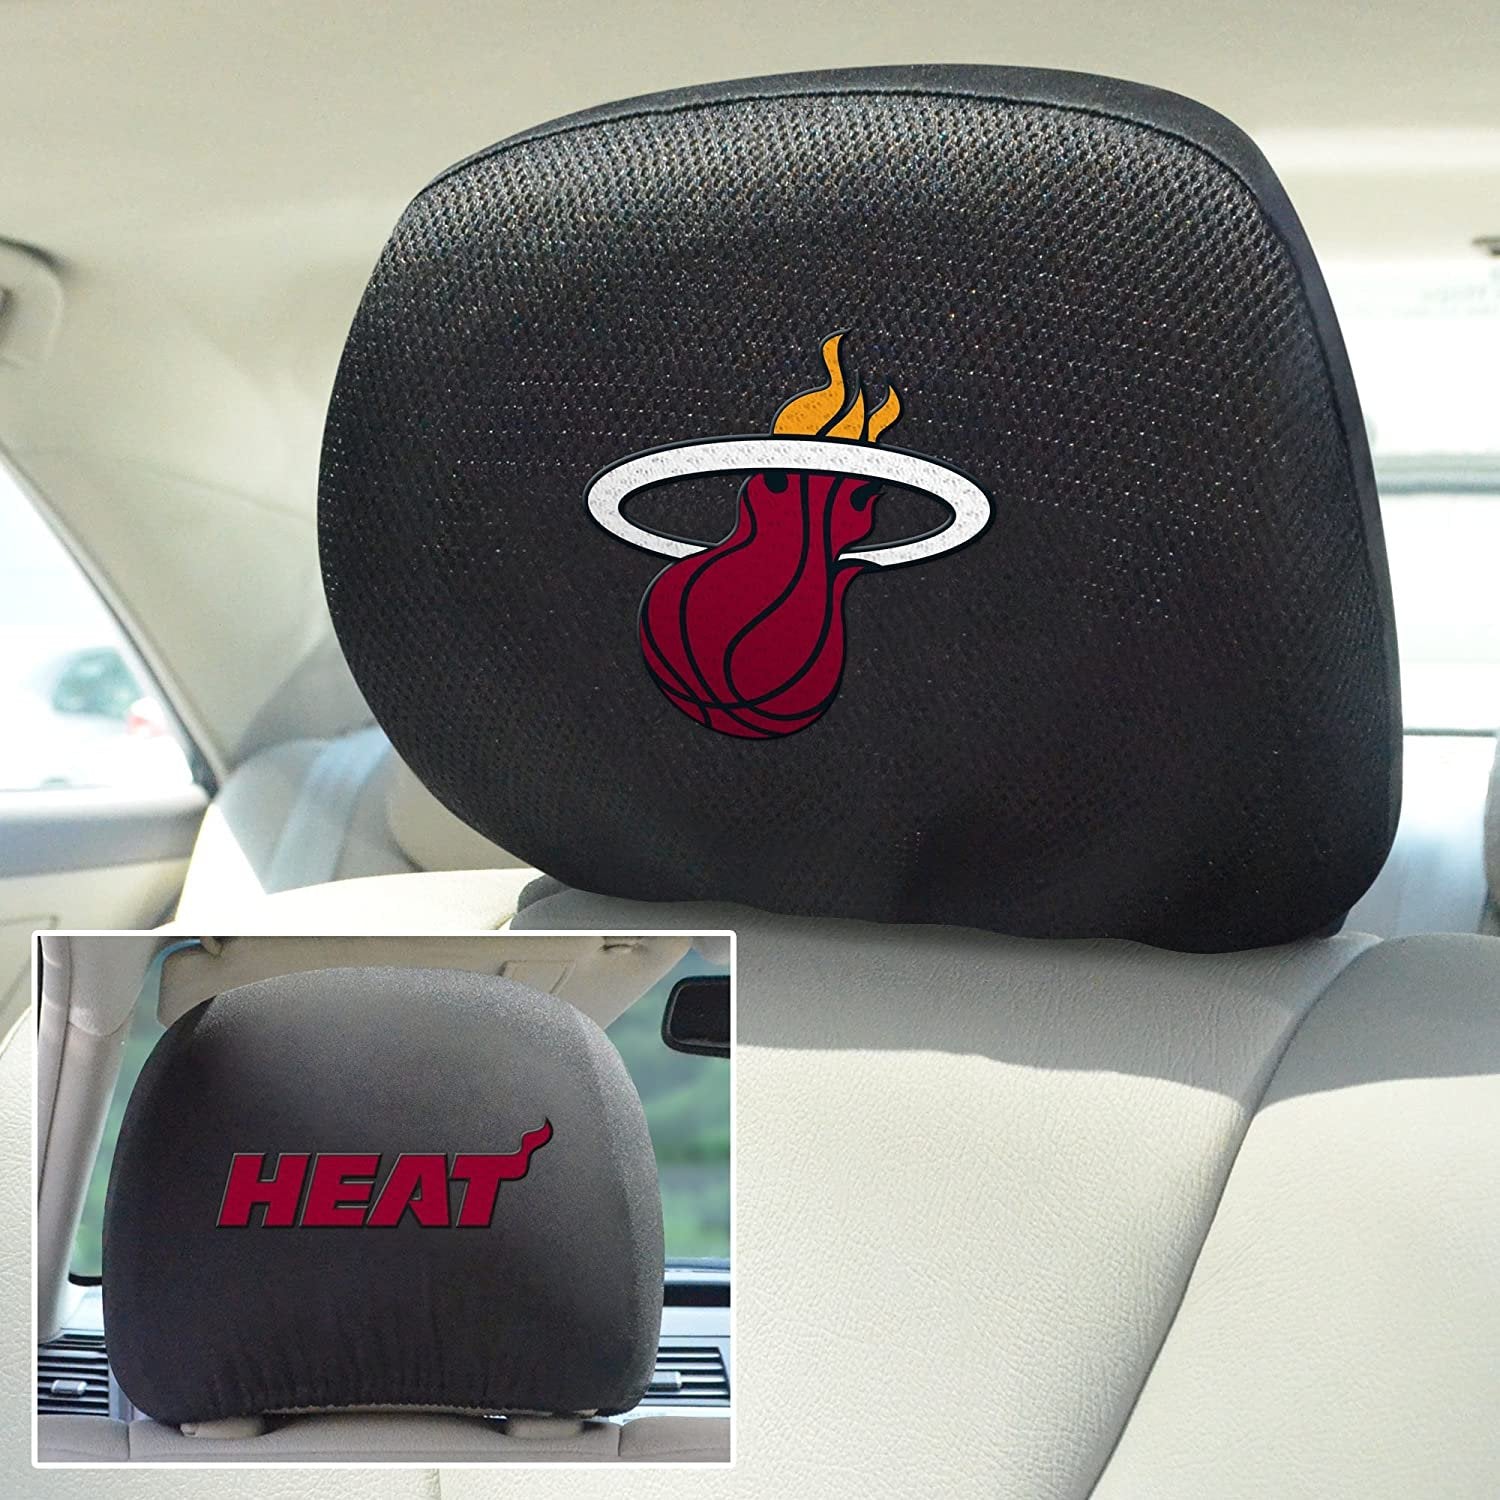 Miami Heat Pair of Premium Auto Head Rest Covers, Embroidered, Black Elastic, 14x10 Inch